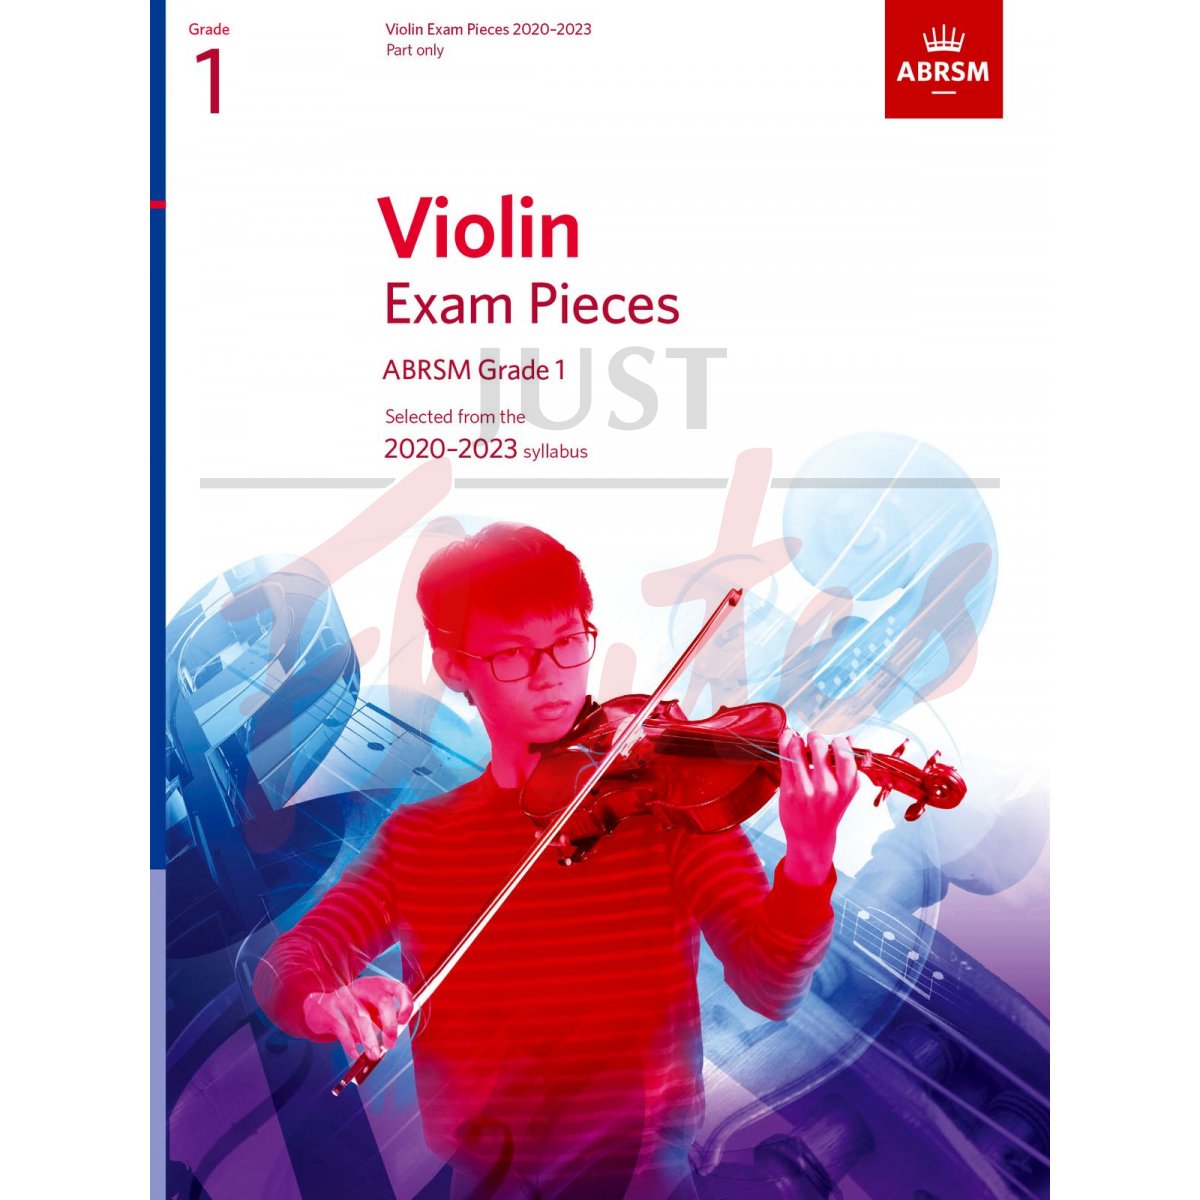 Violin Exam Pieces 2020-2023, Grade 1 [Part Only]